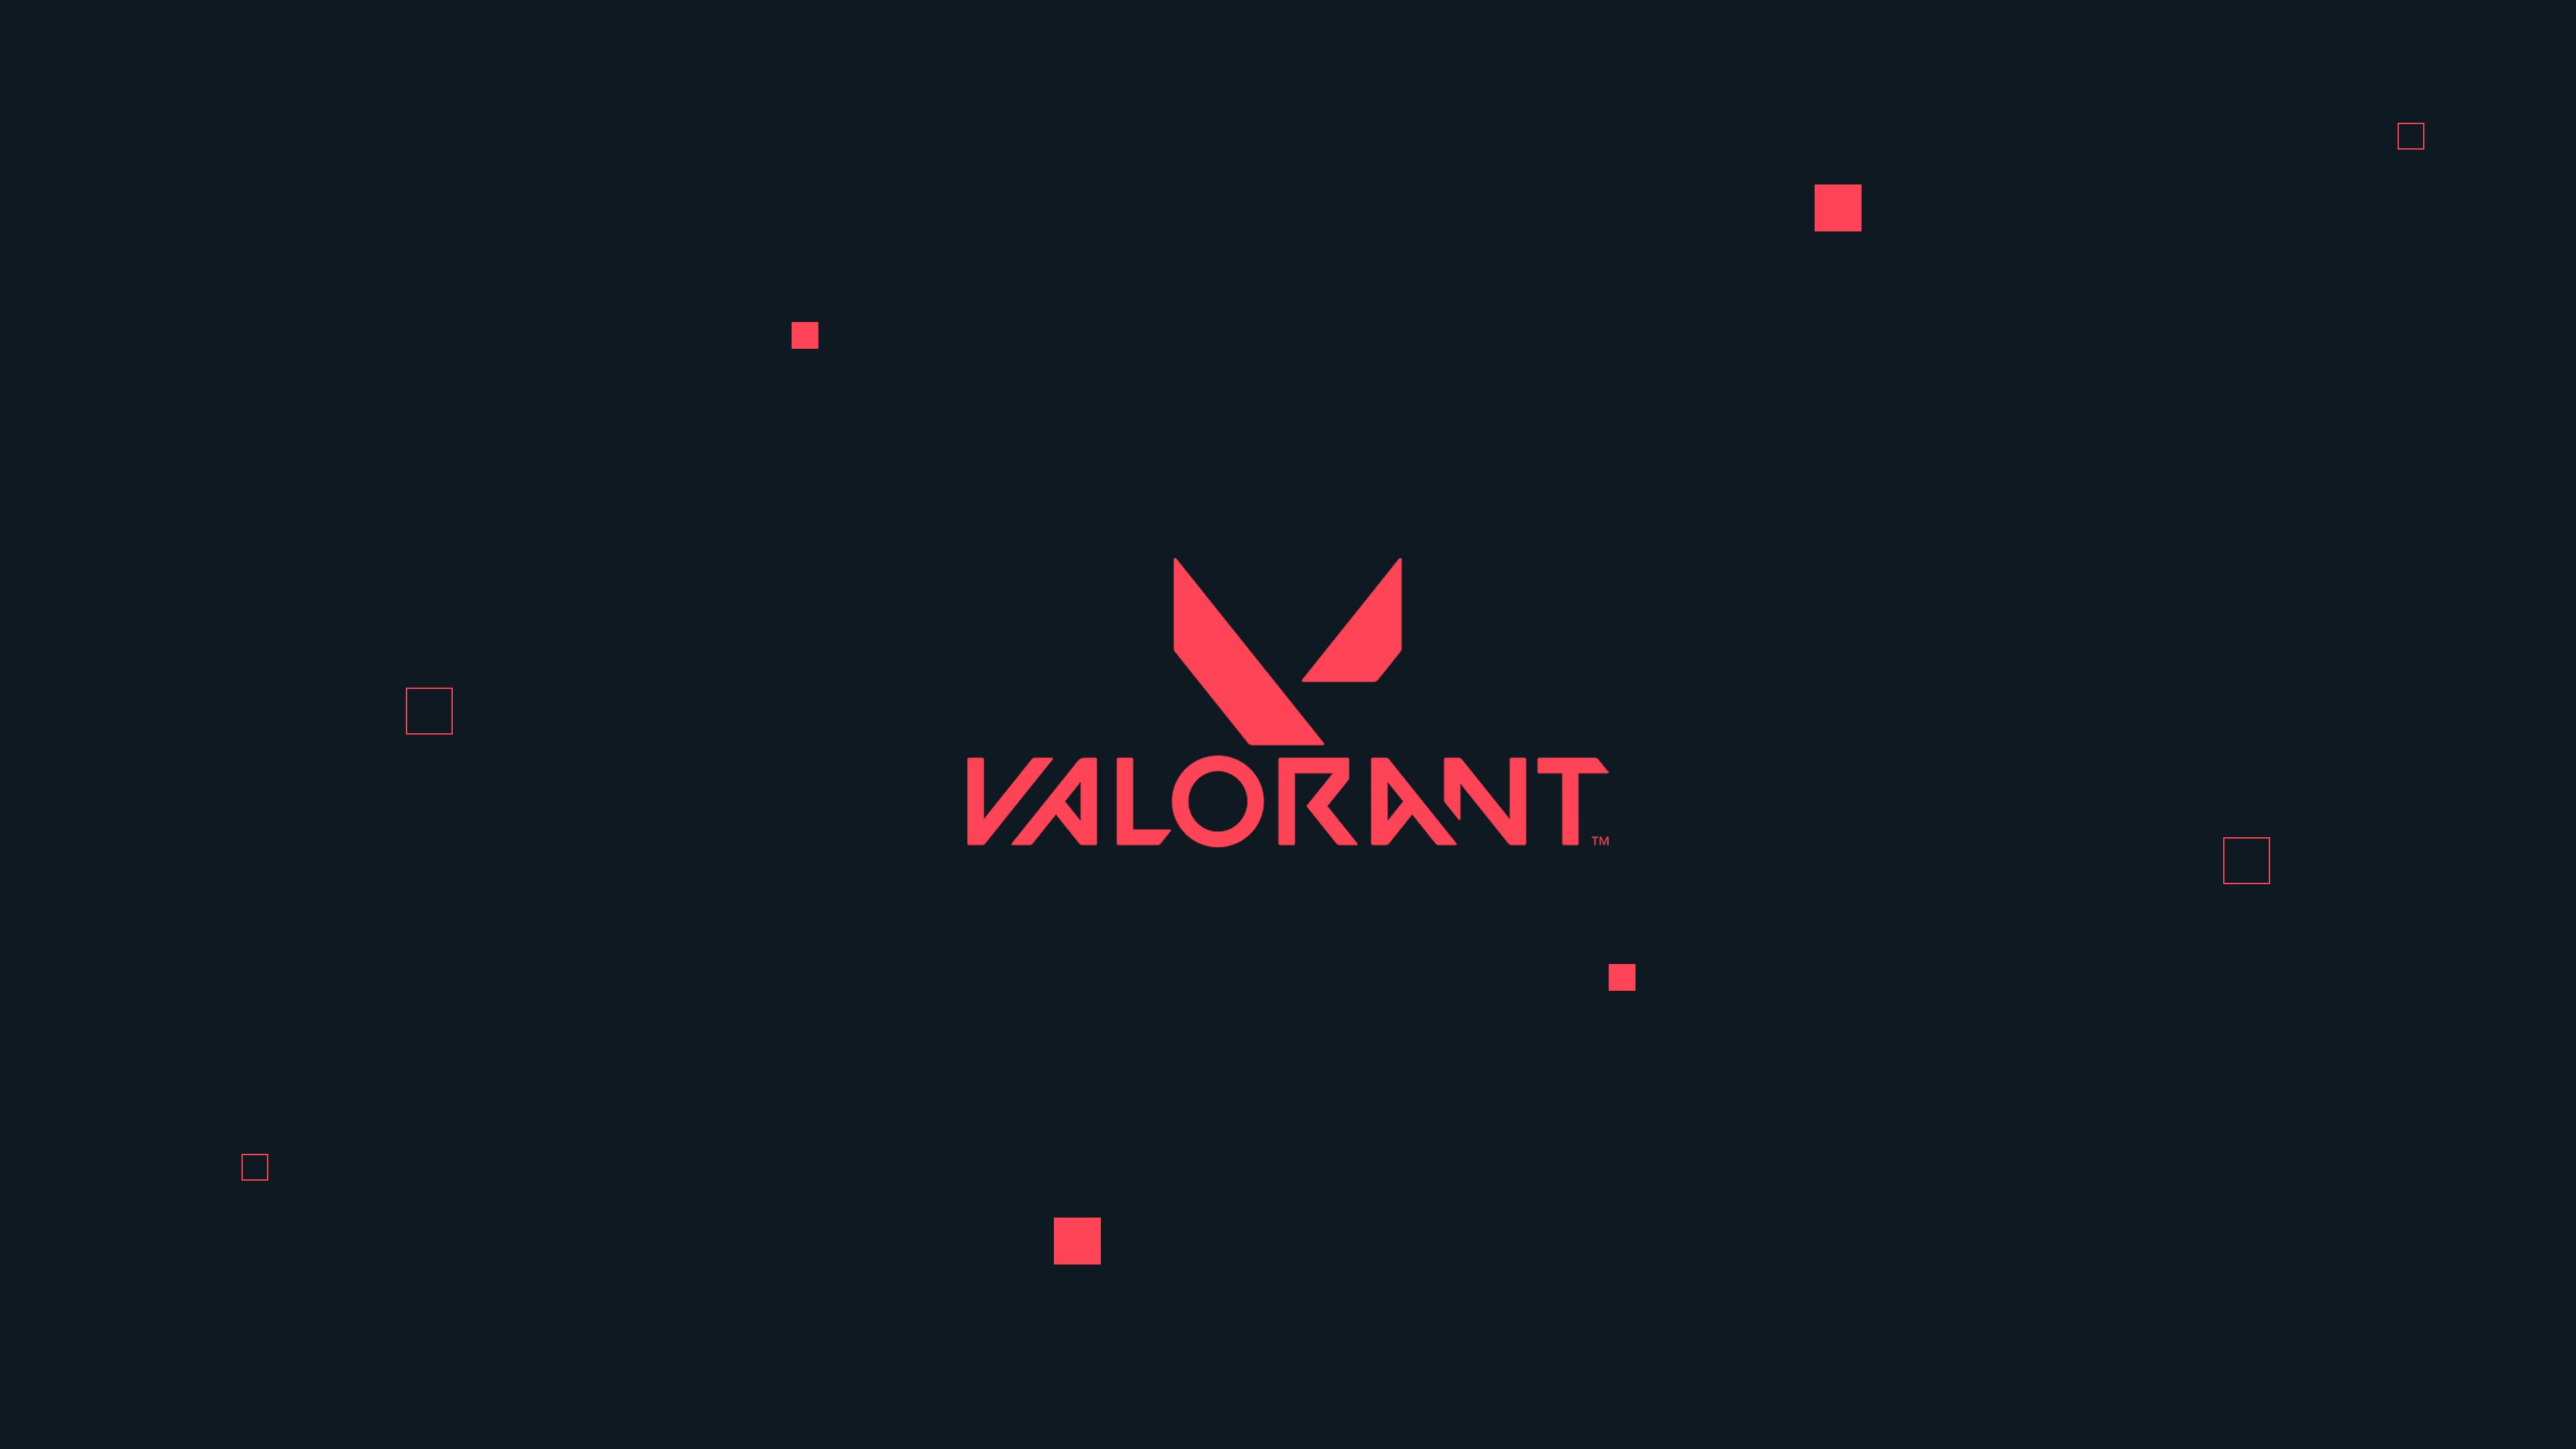 Valorant Wallpaper 4K, PC Games, 2020 Games, Black Dark